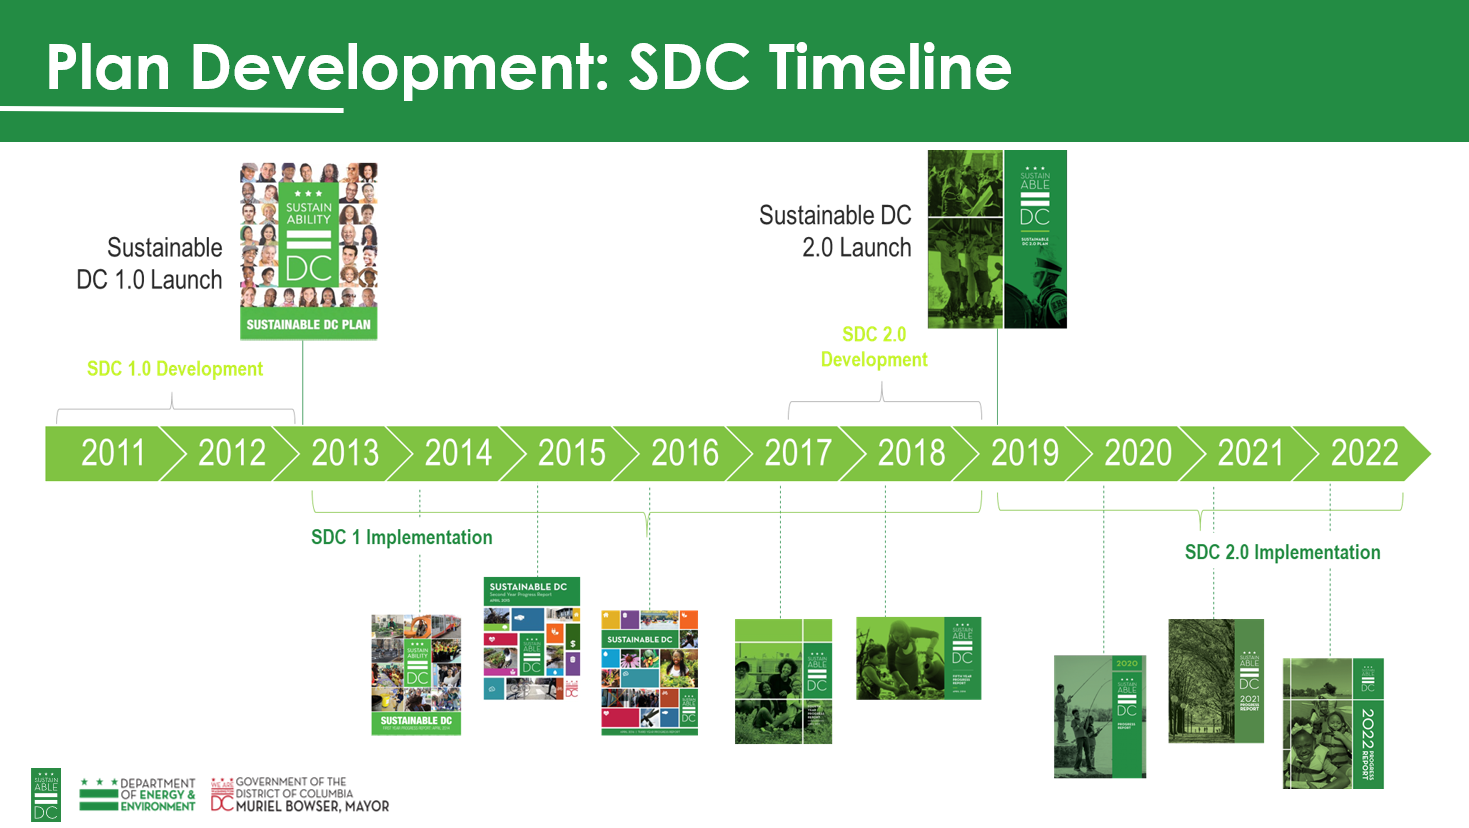 SDC Timeline_SDC History